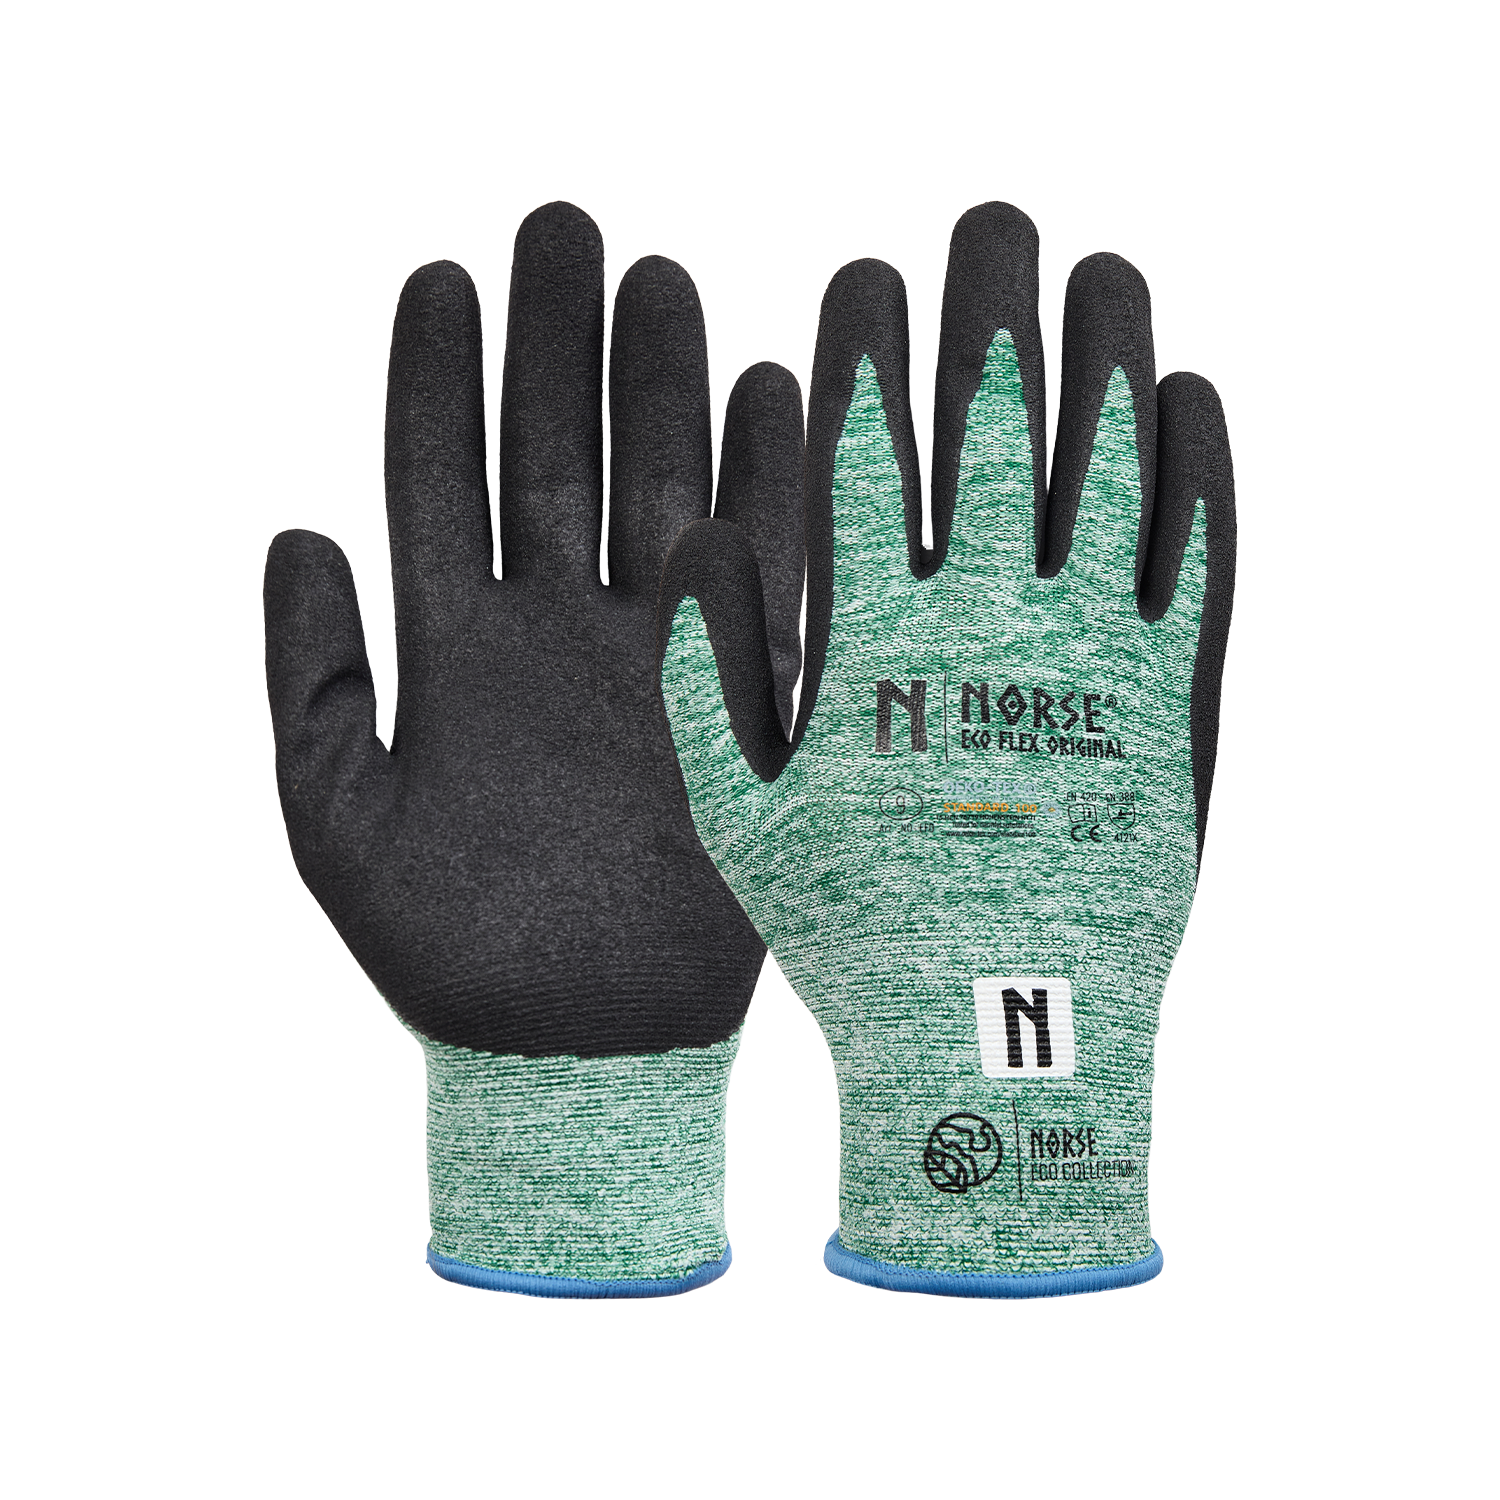 NORSE Eco Flex Original assembly gloves size 9